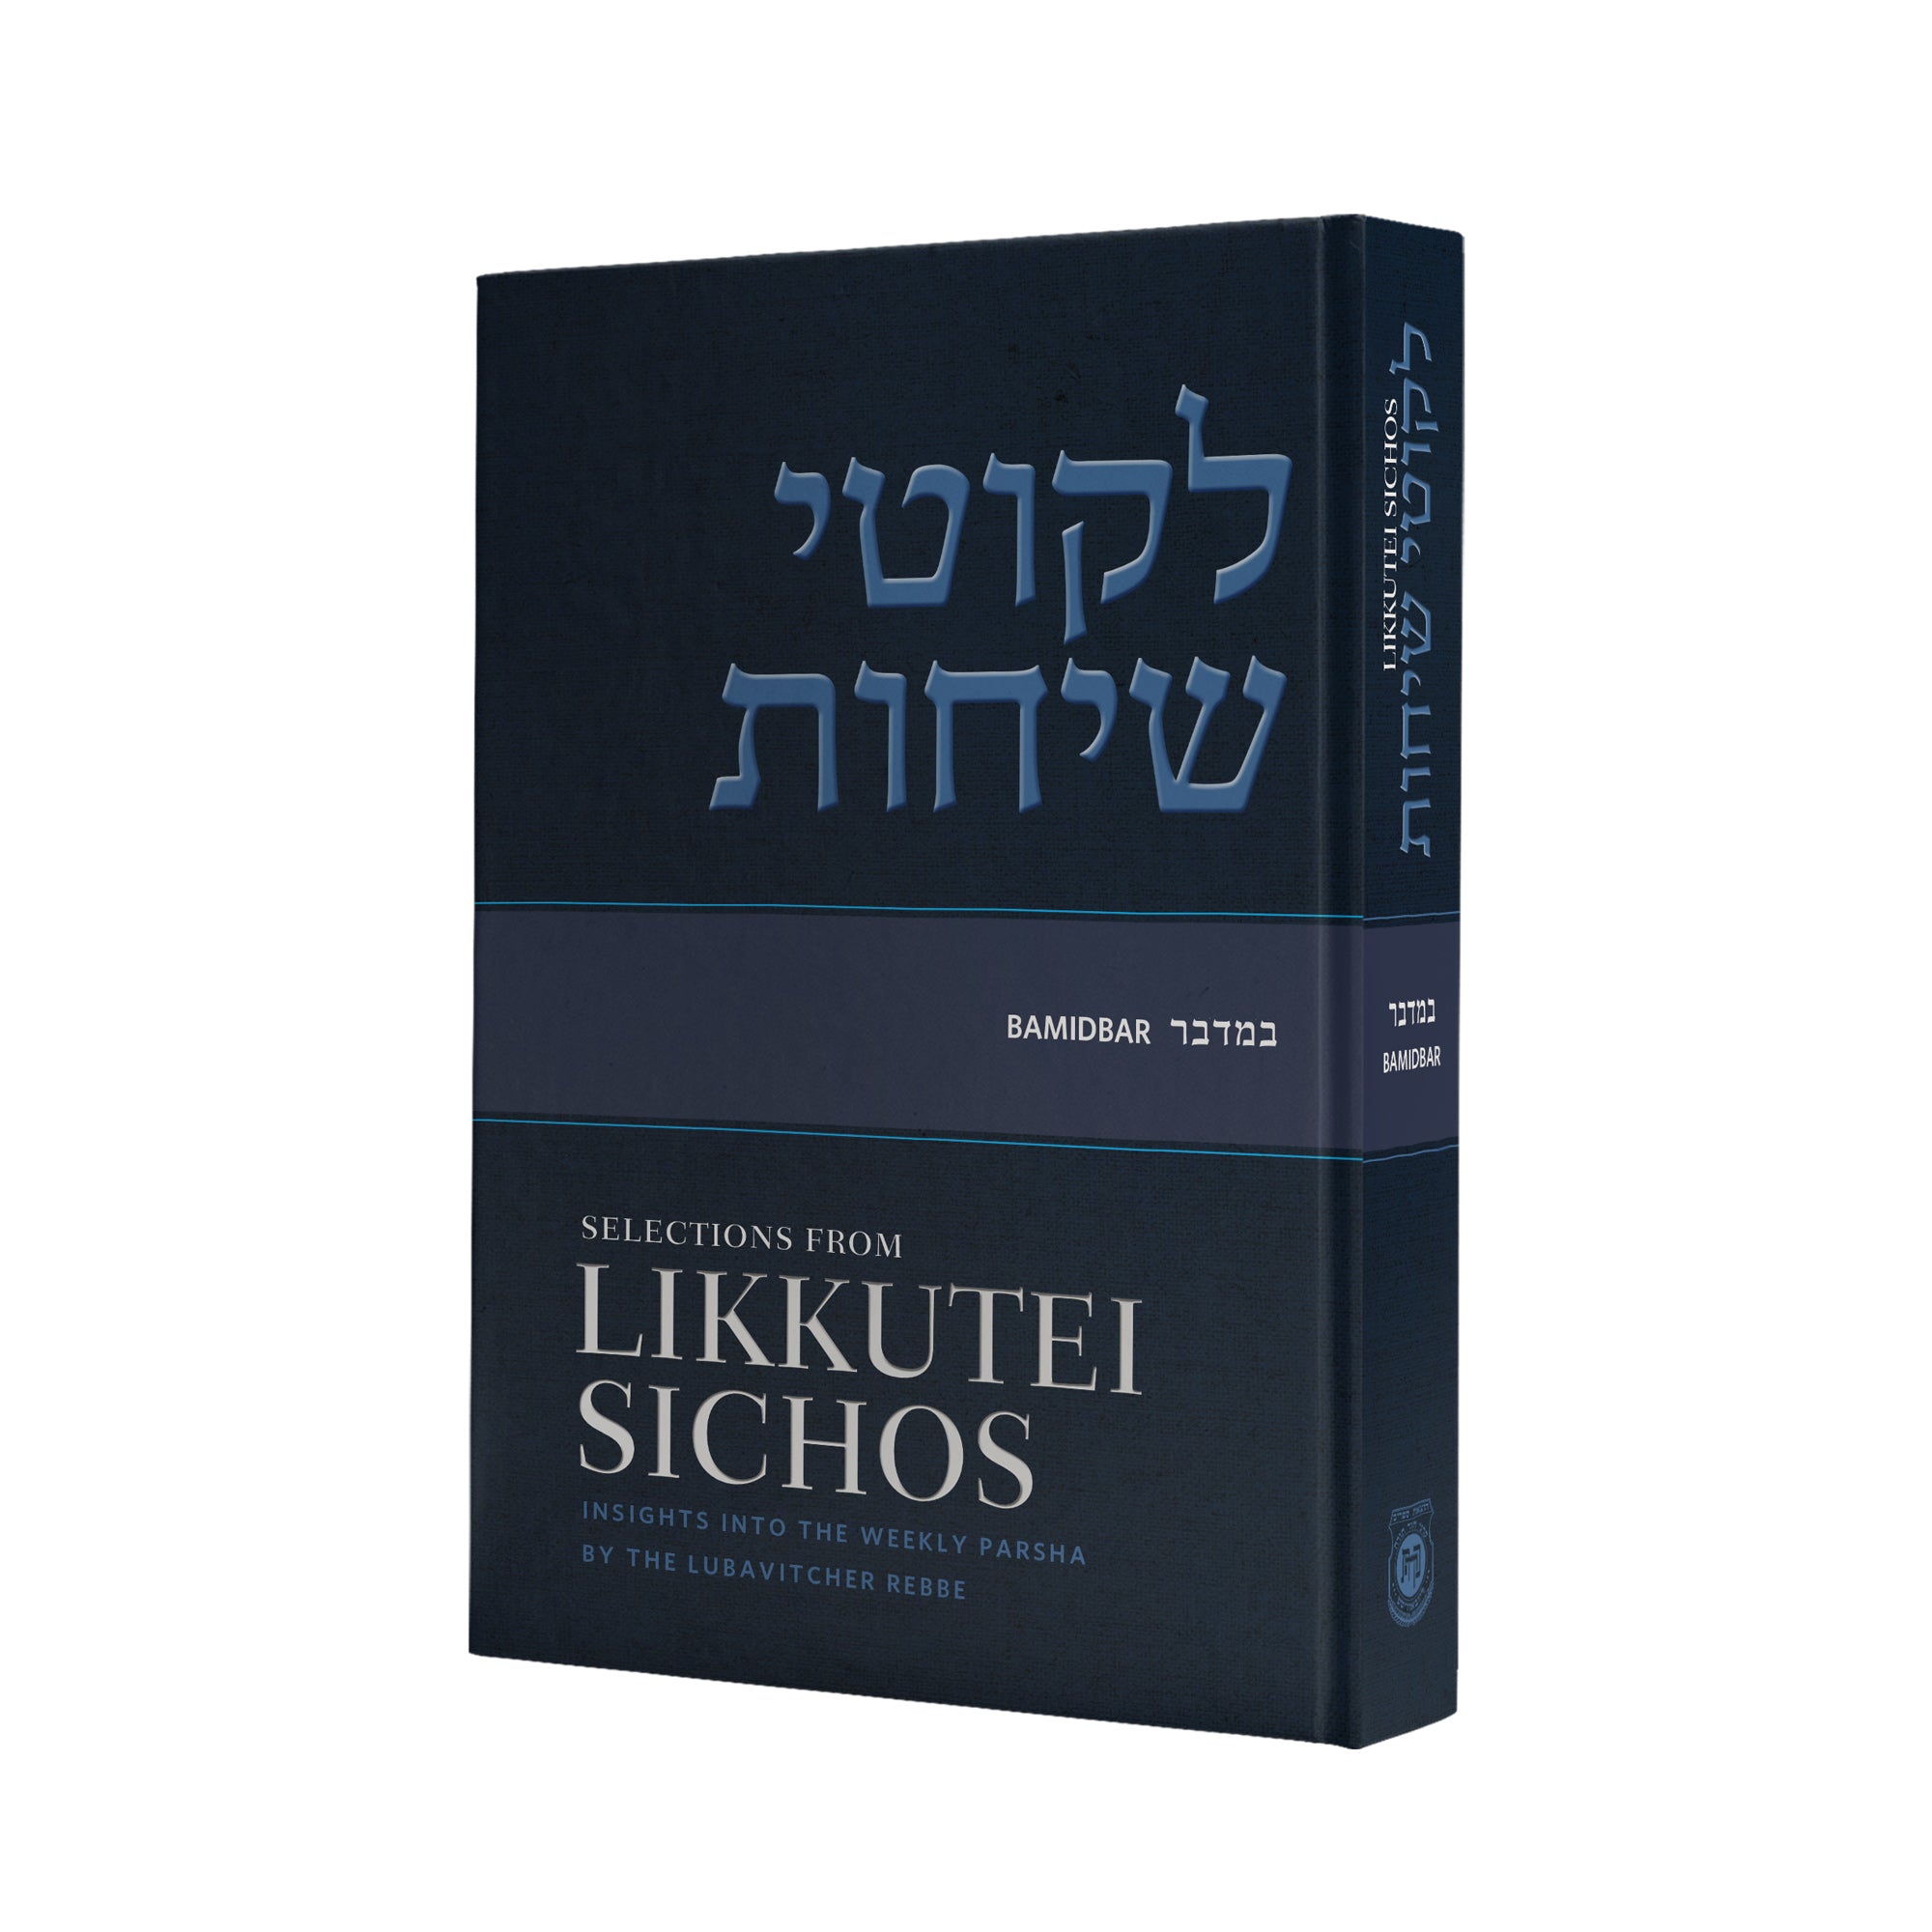 Selections From Likkutei Sichos, Volume 4 (Bamidbar)